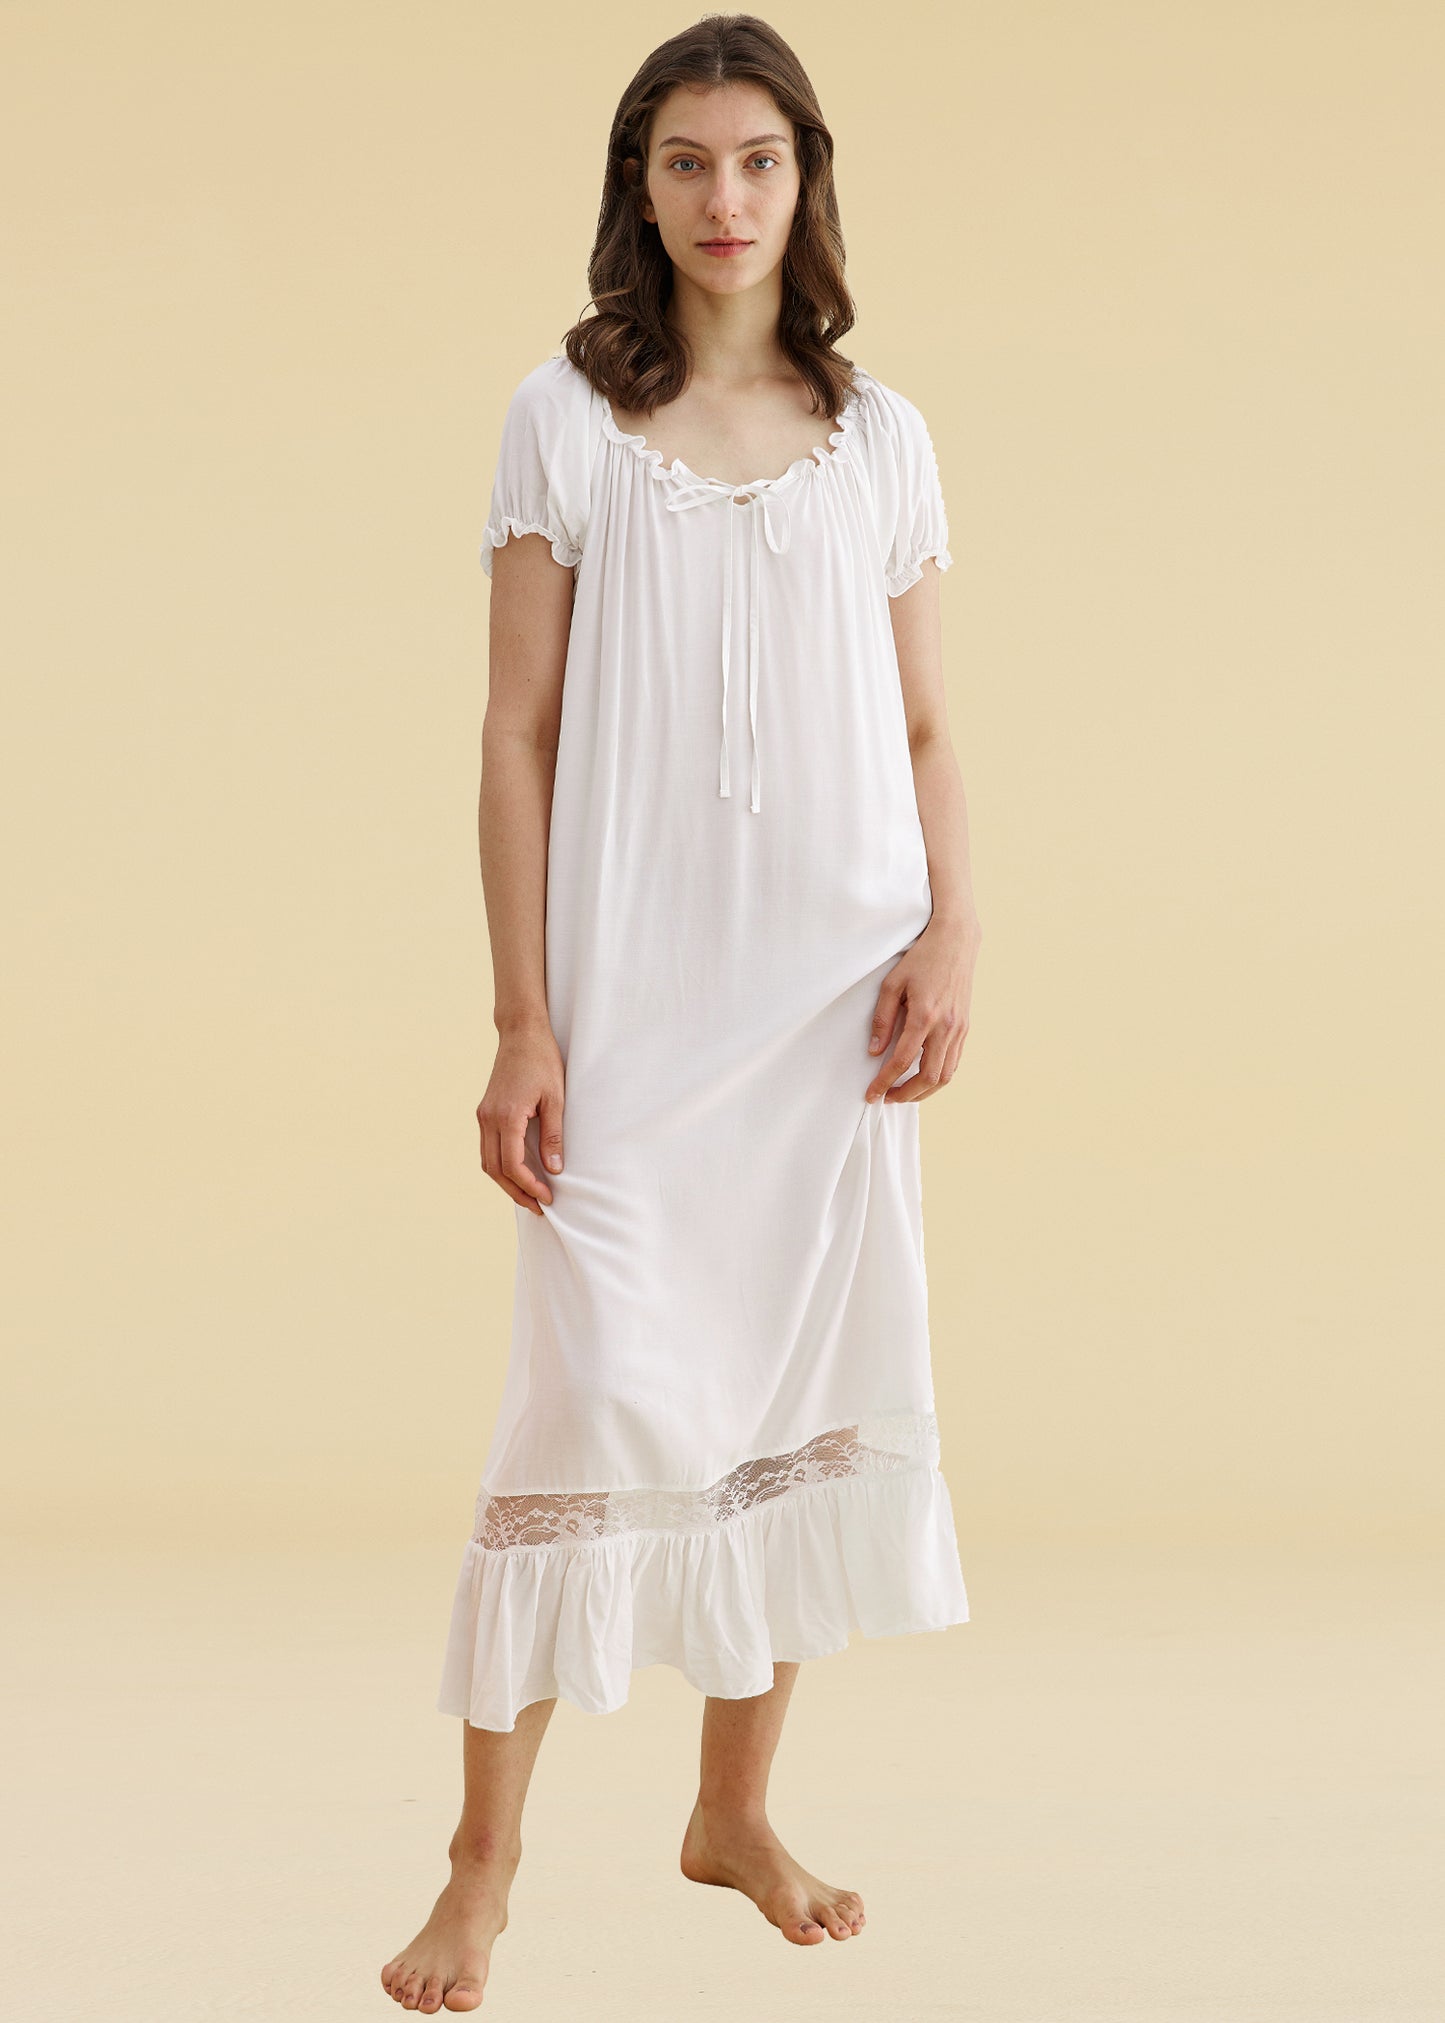 Women's Sleepwear Off The Shoulder Victorian Nightgown